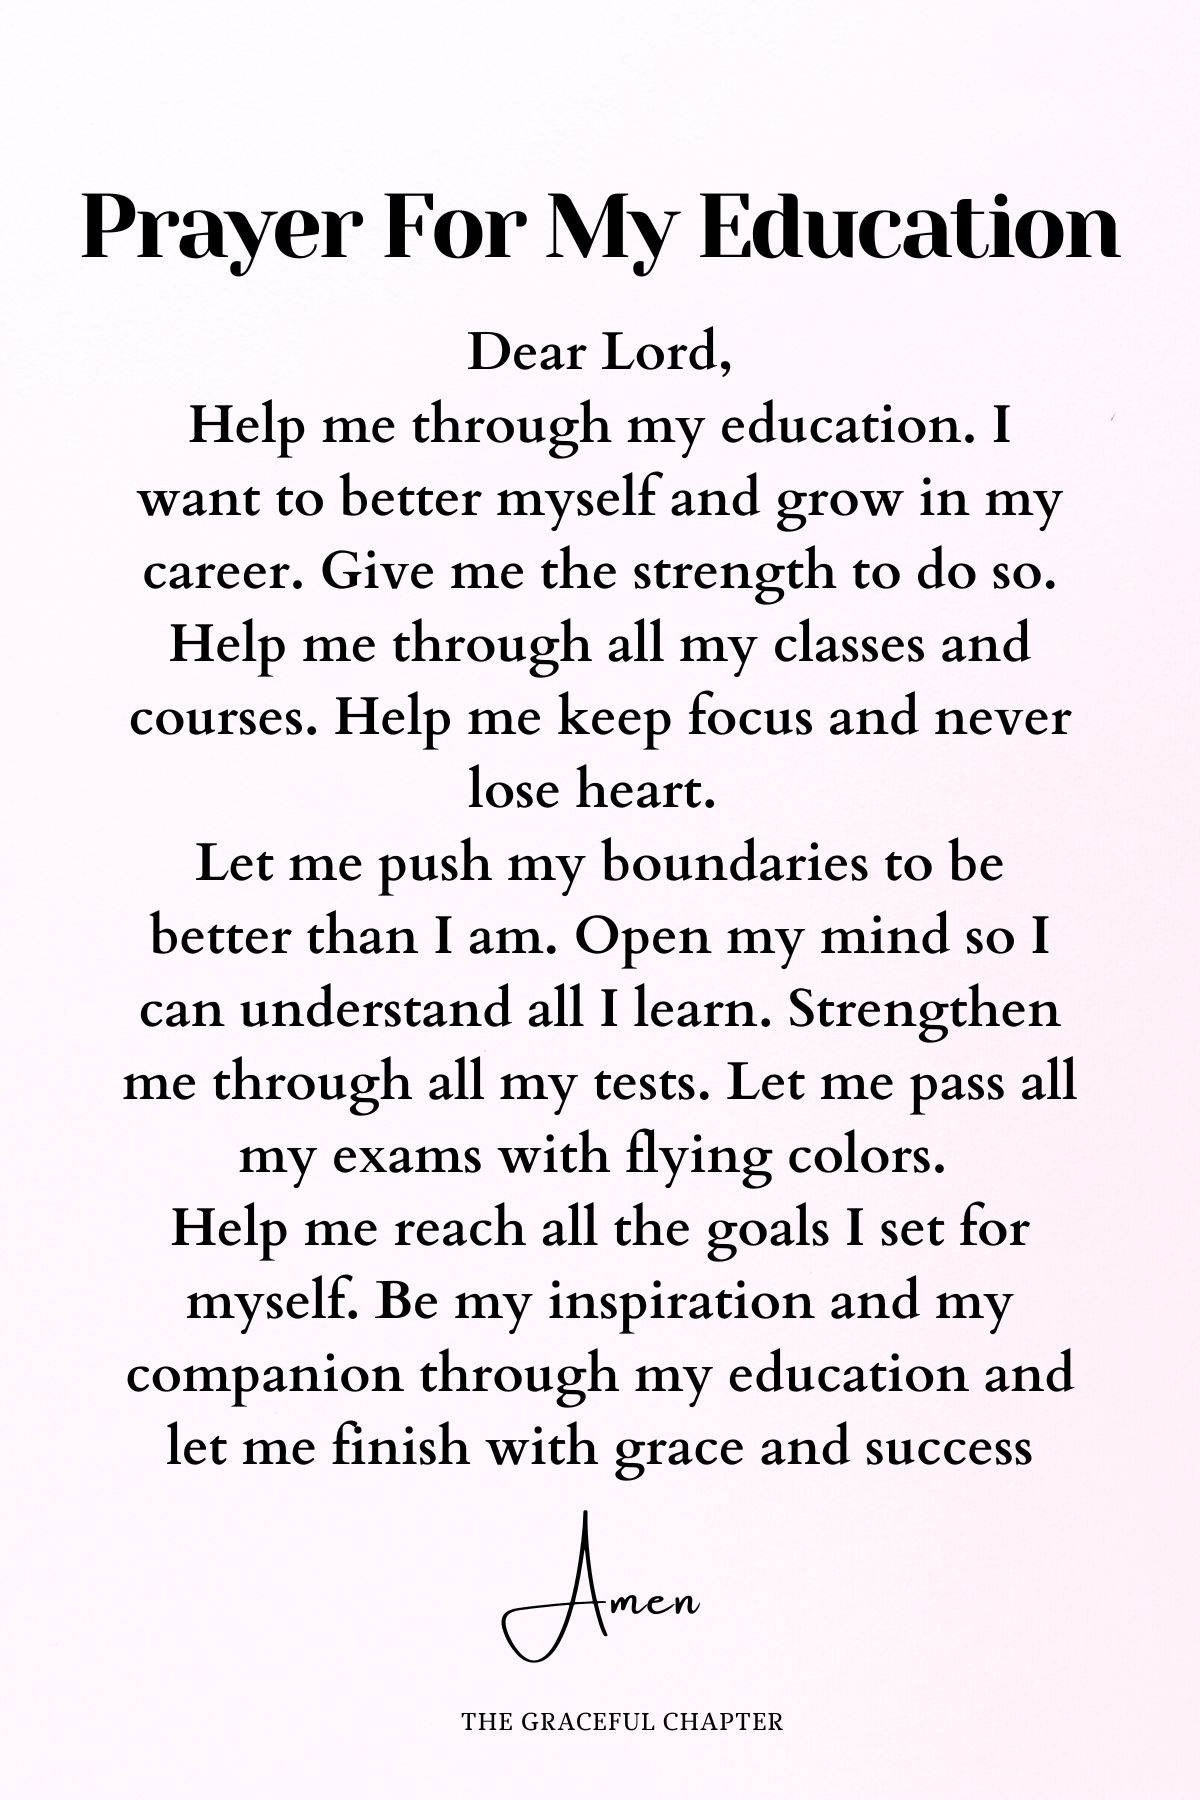 Prayer for my education